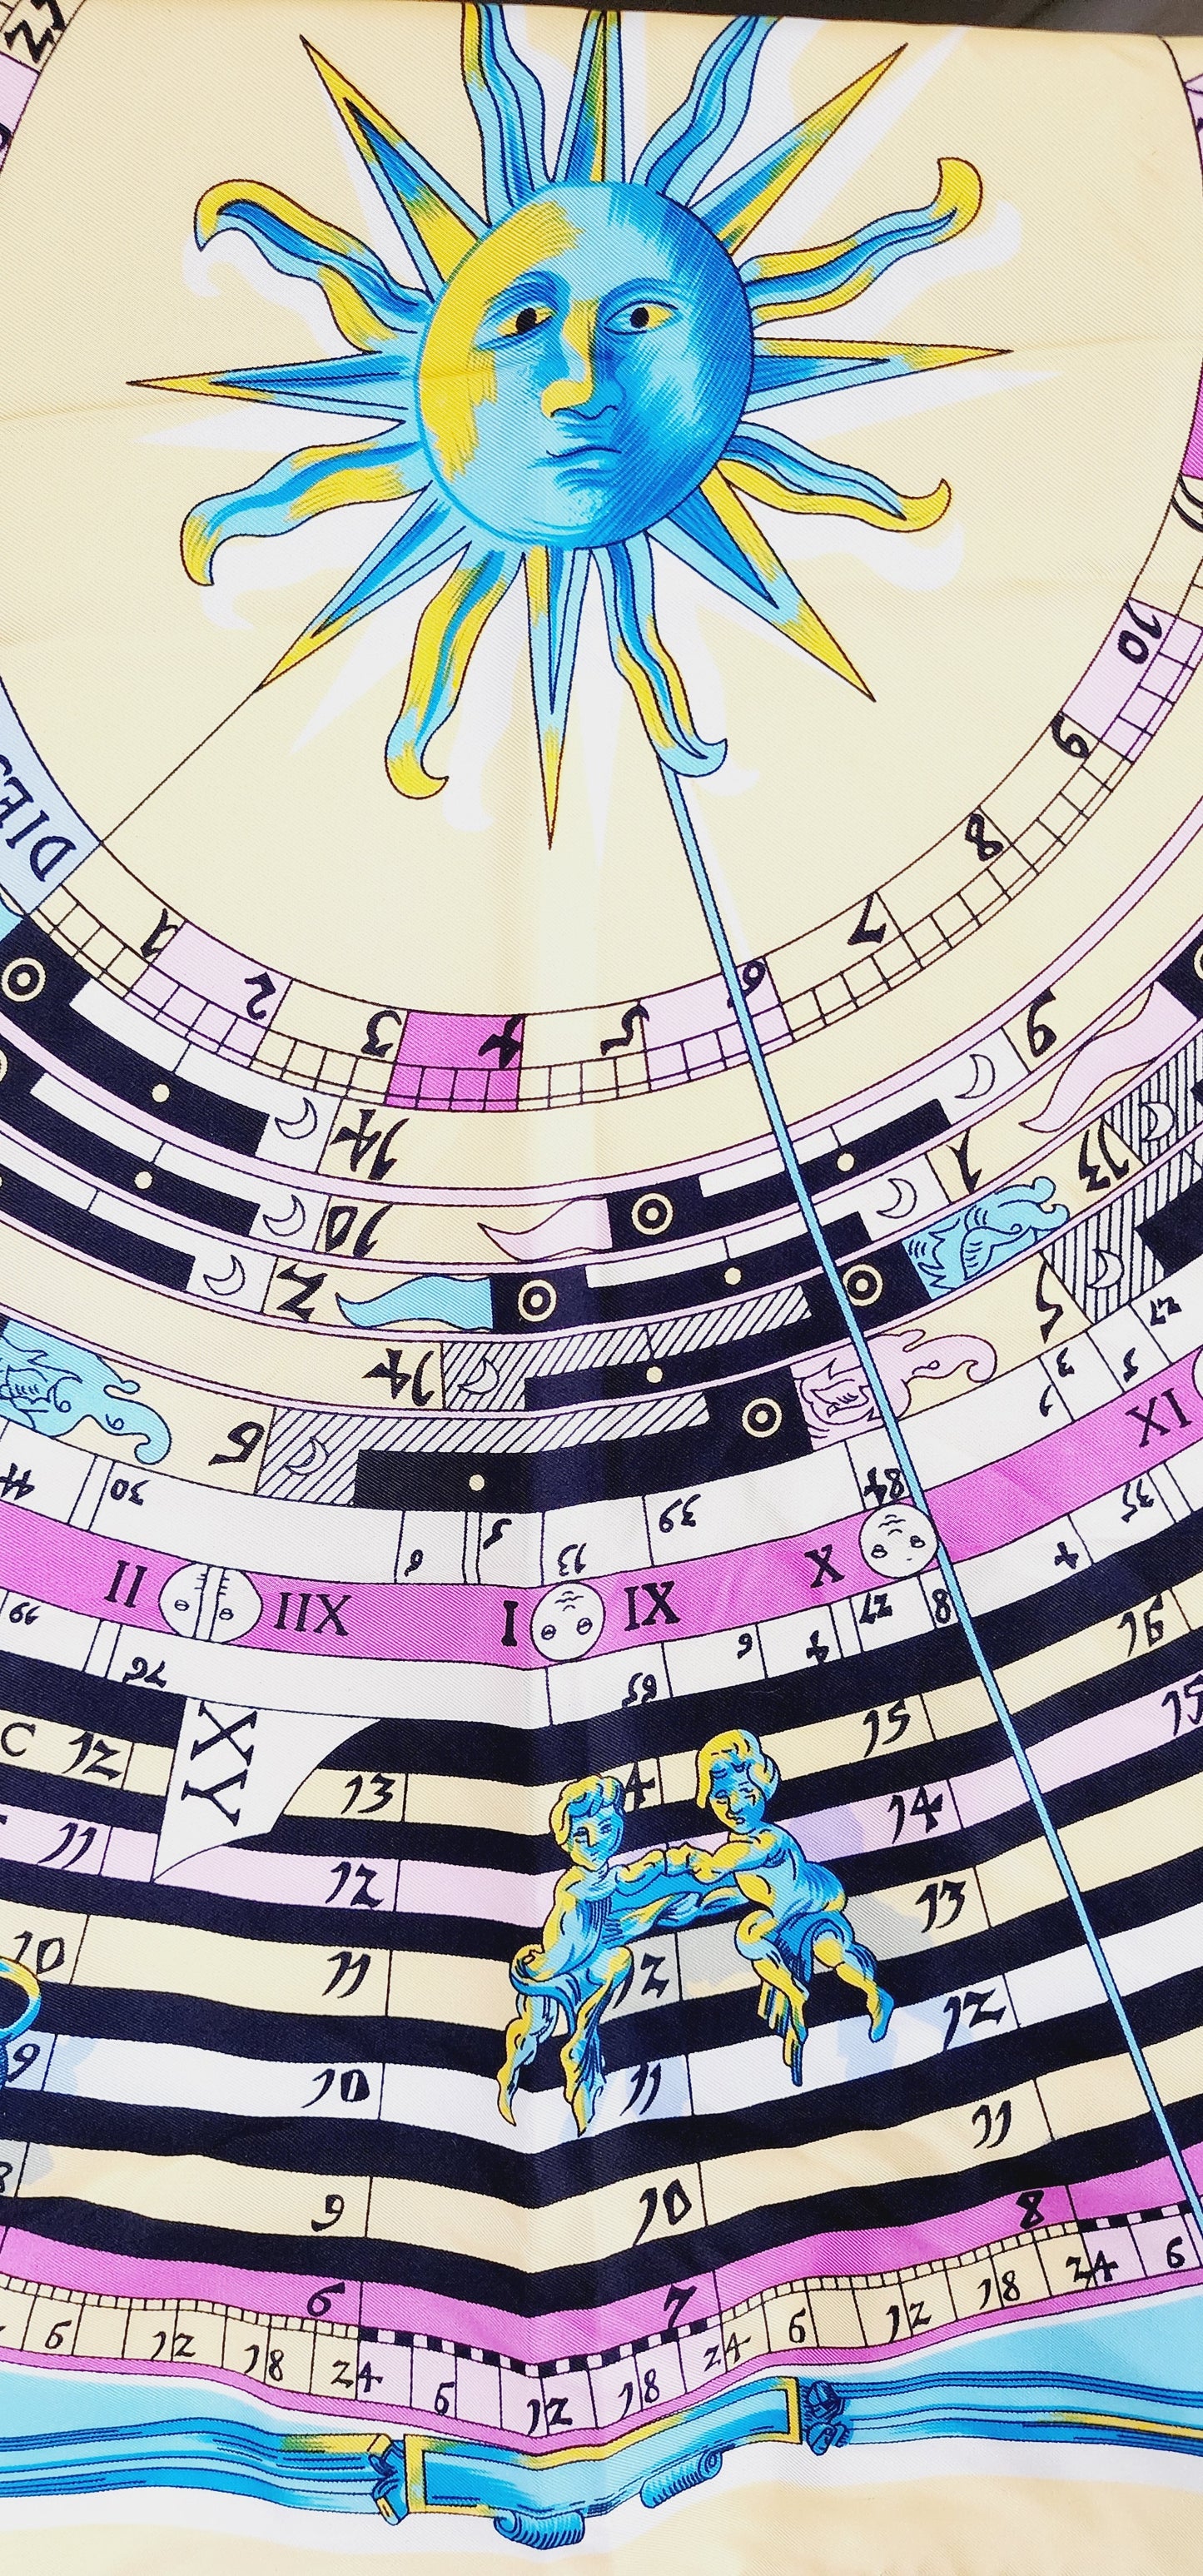 90s Silkprint Scarf w/Horoscope Chart Zodiac Design Yellow Blue Pink